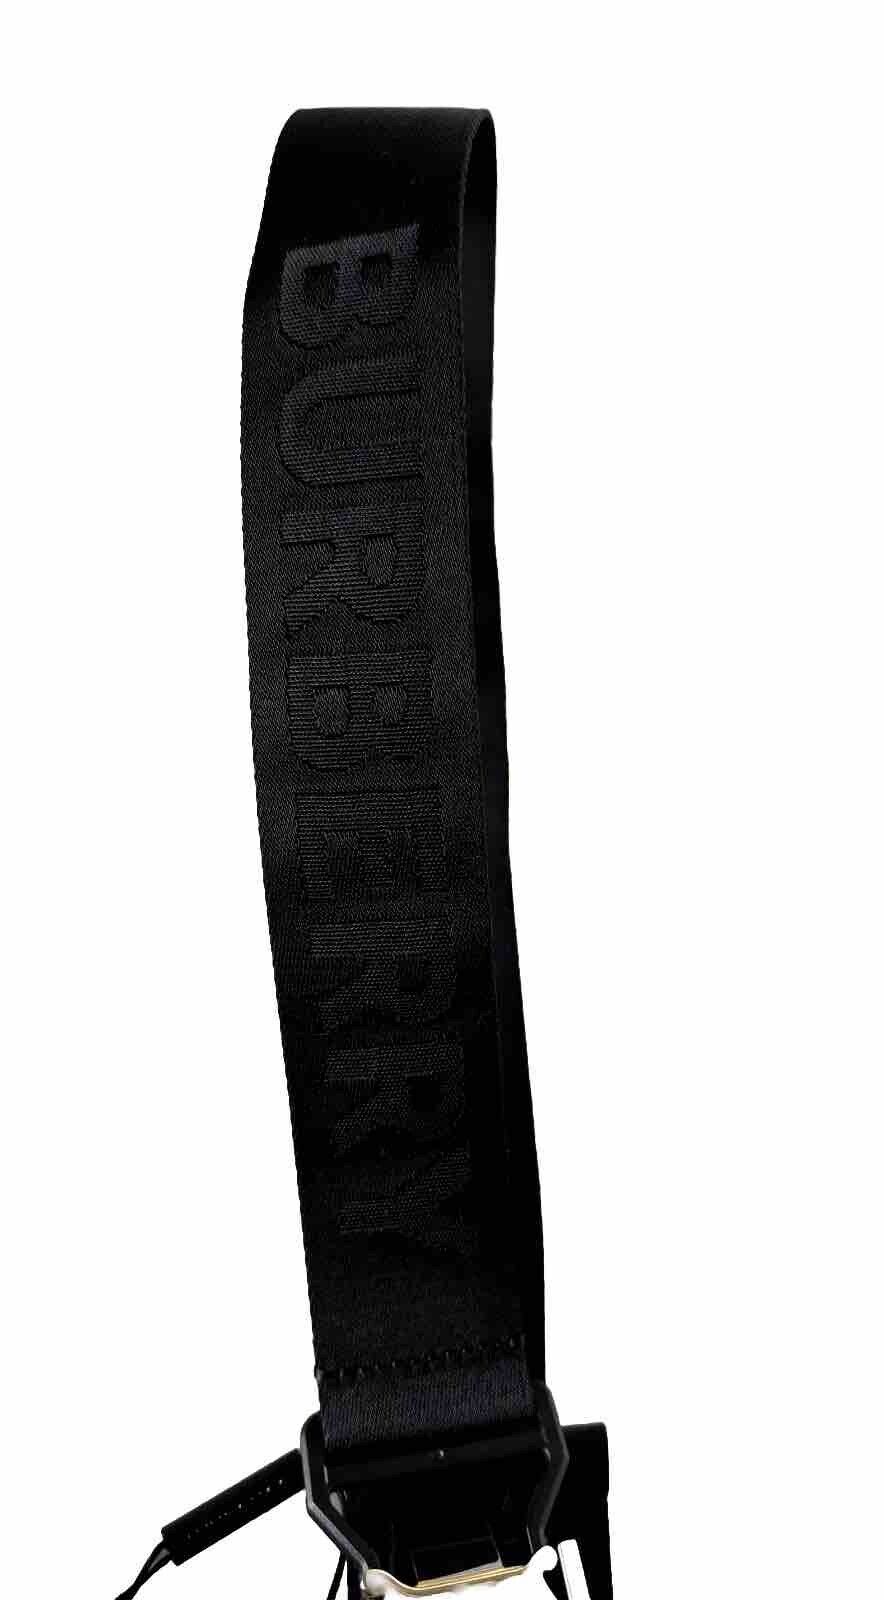 Burberry Sport Clip TB Buckle Nylon Black Belt 36/90 Italy 8051510 New $440